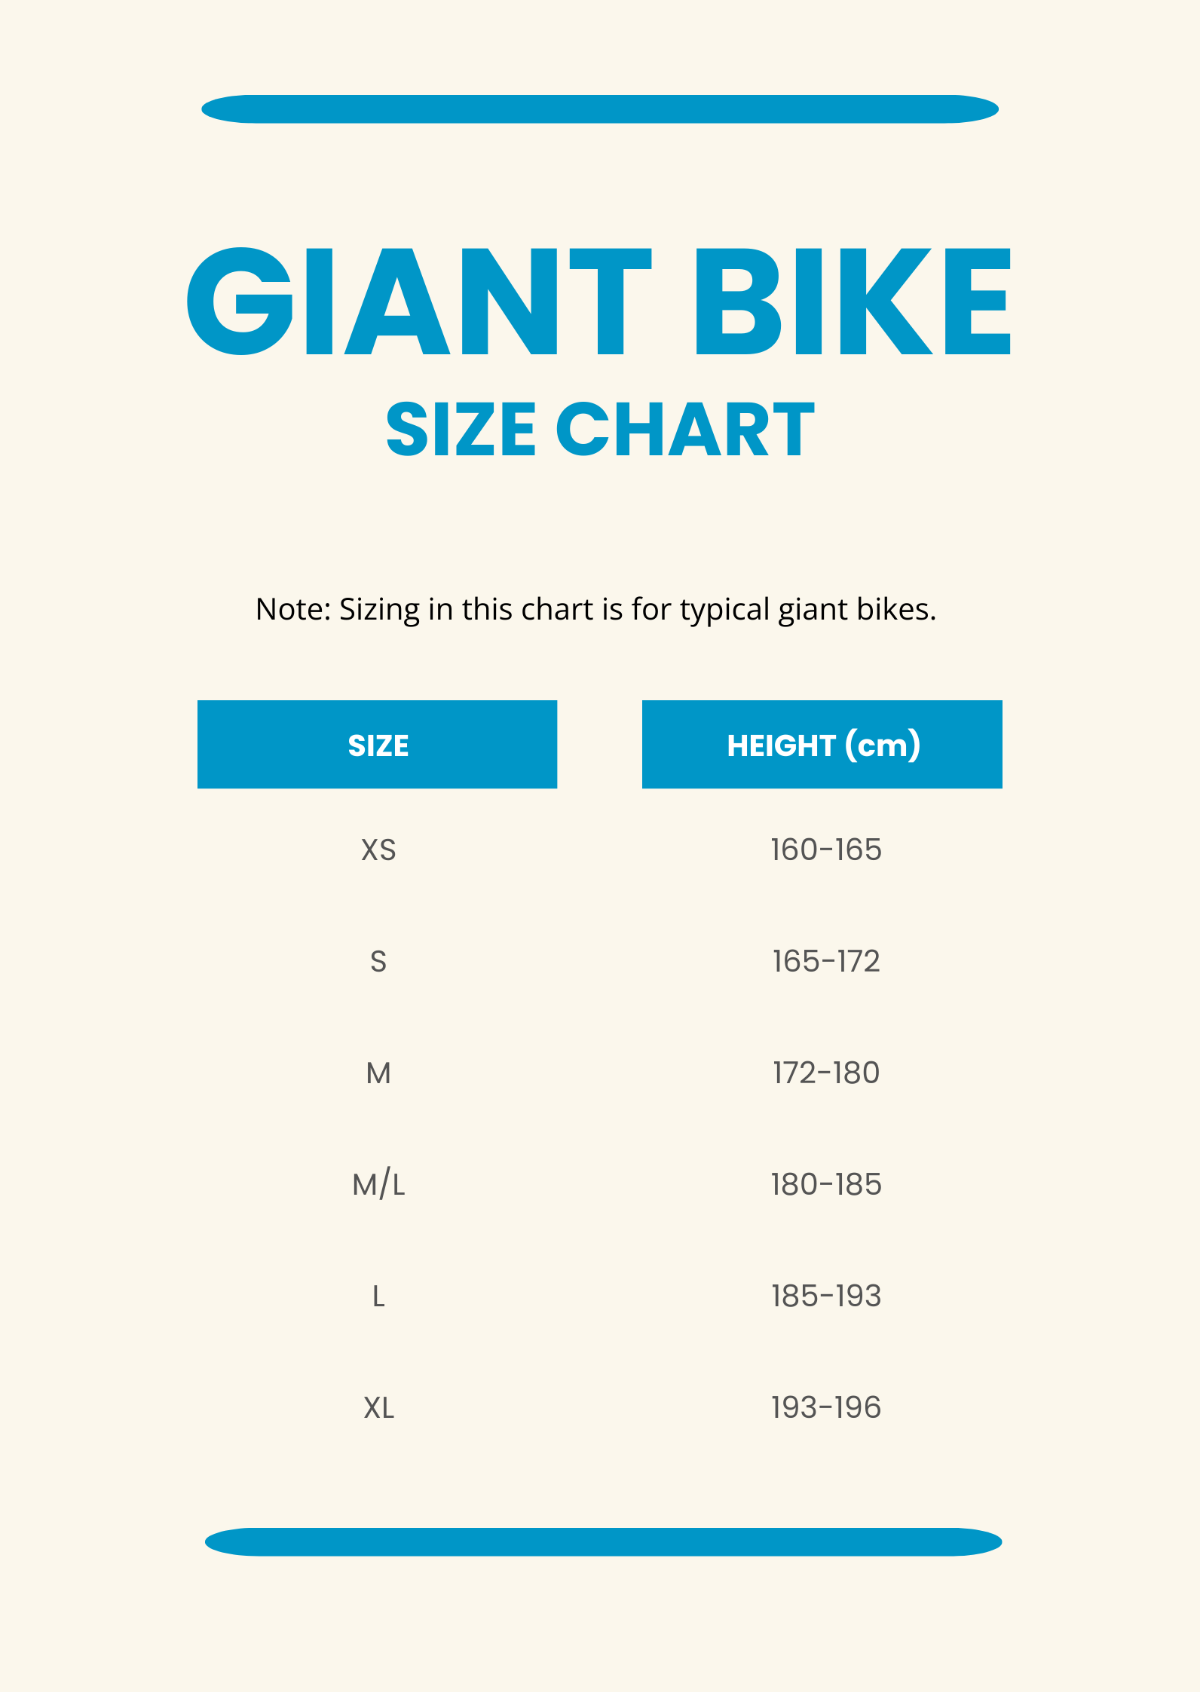 Giant Bike Size Chart Template